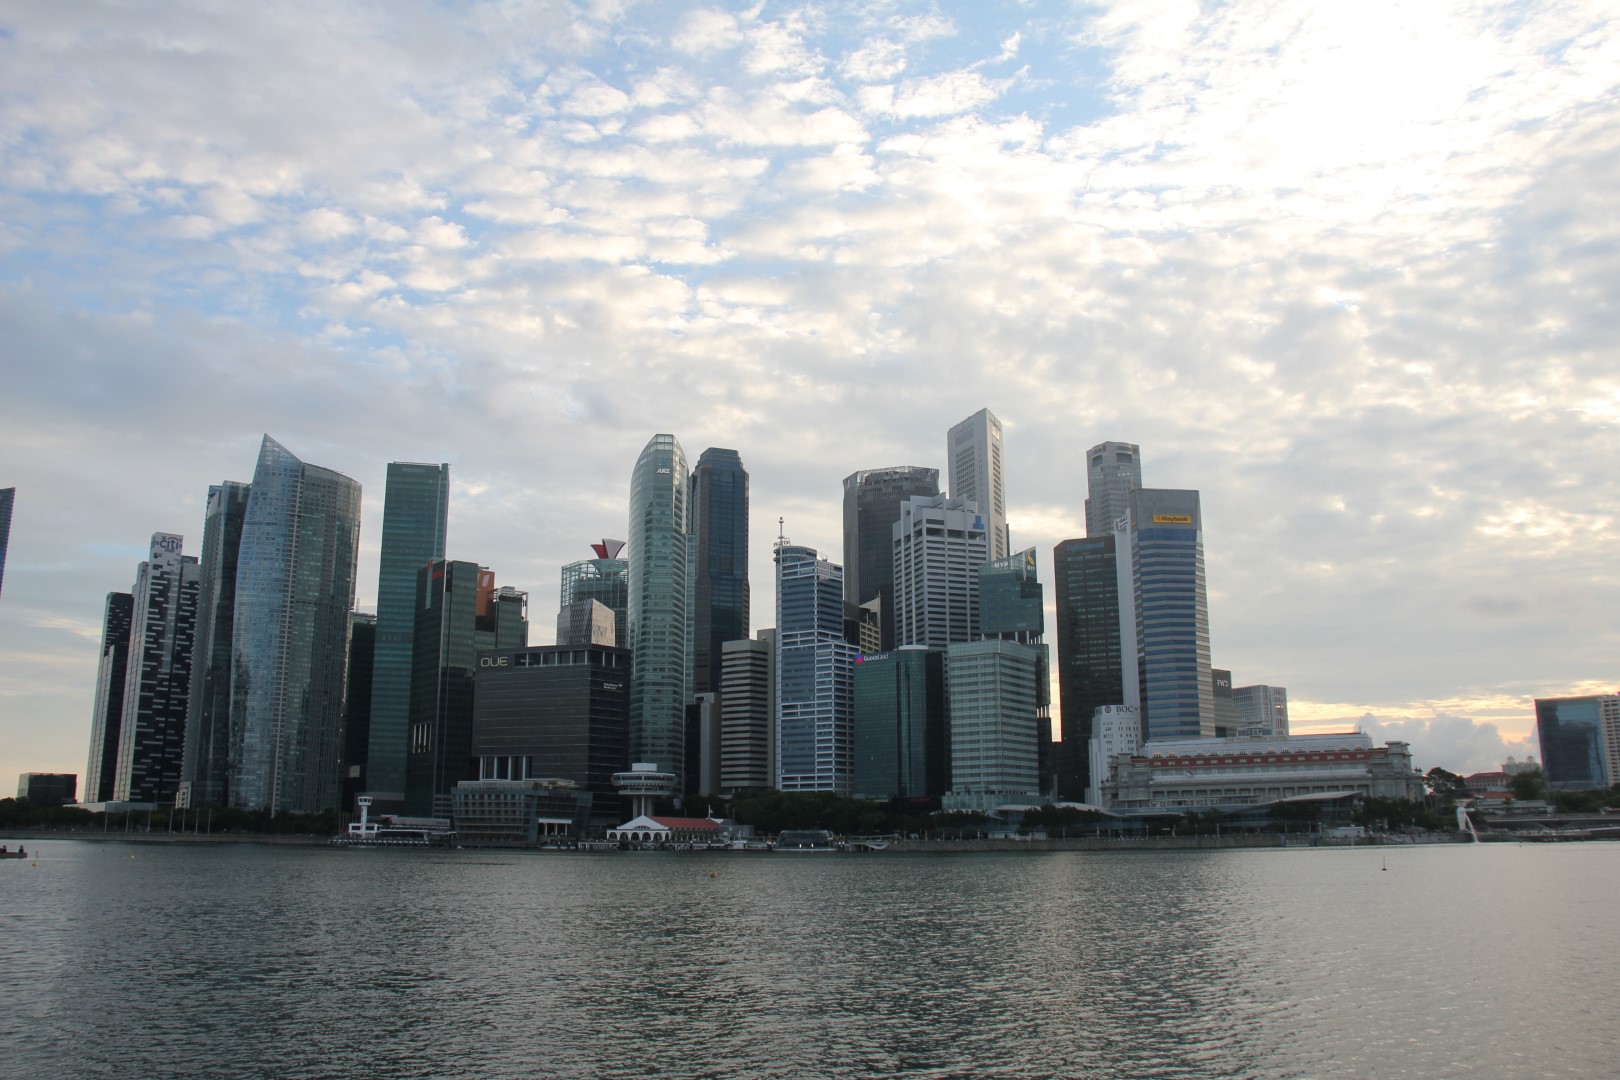 Impressions of Singapore